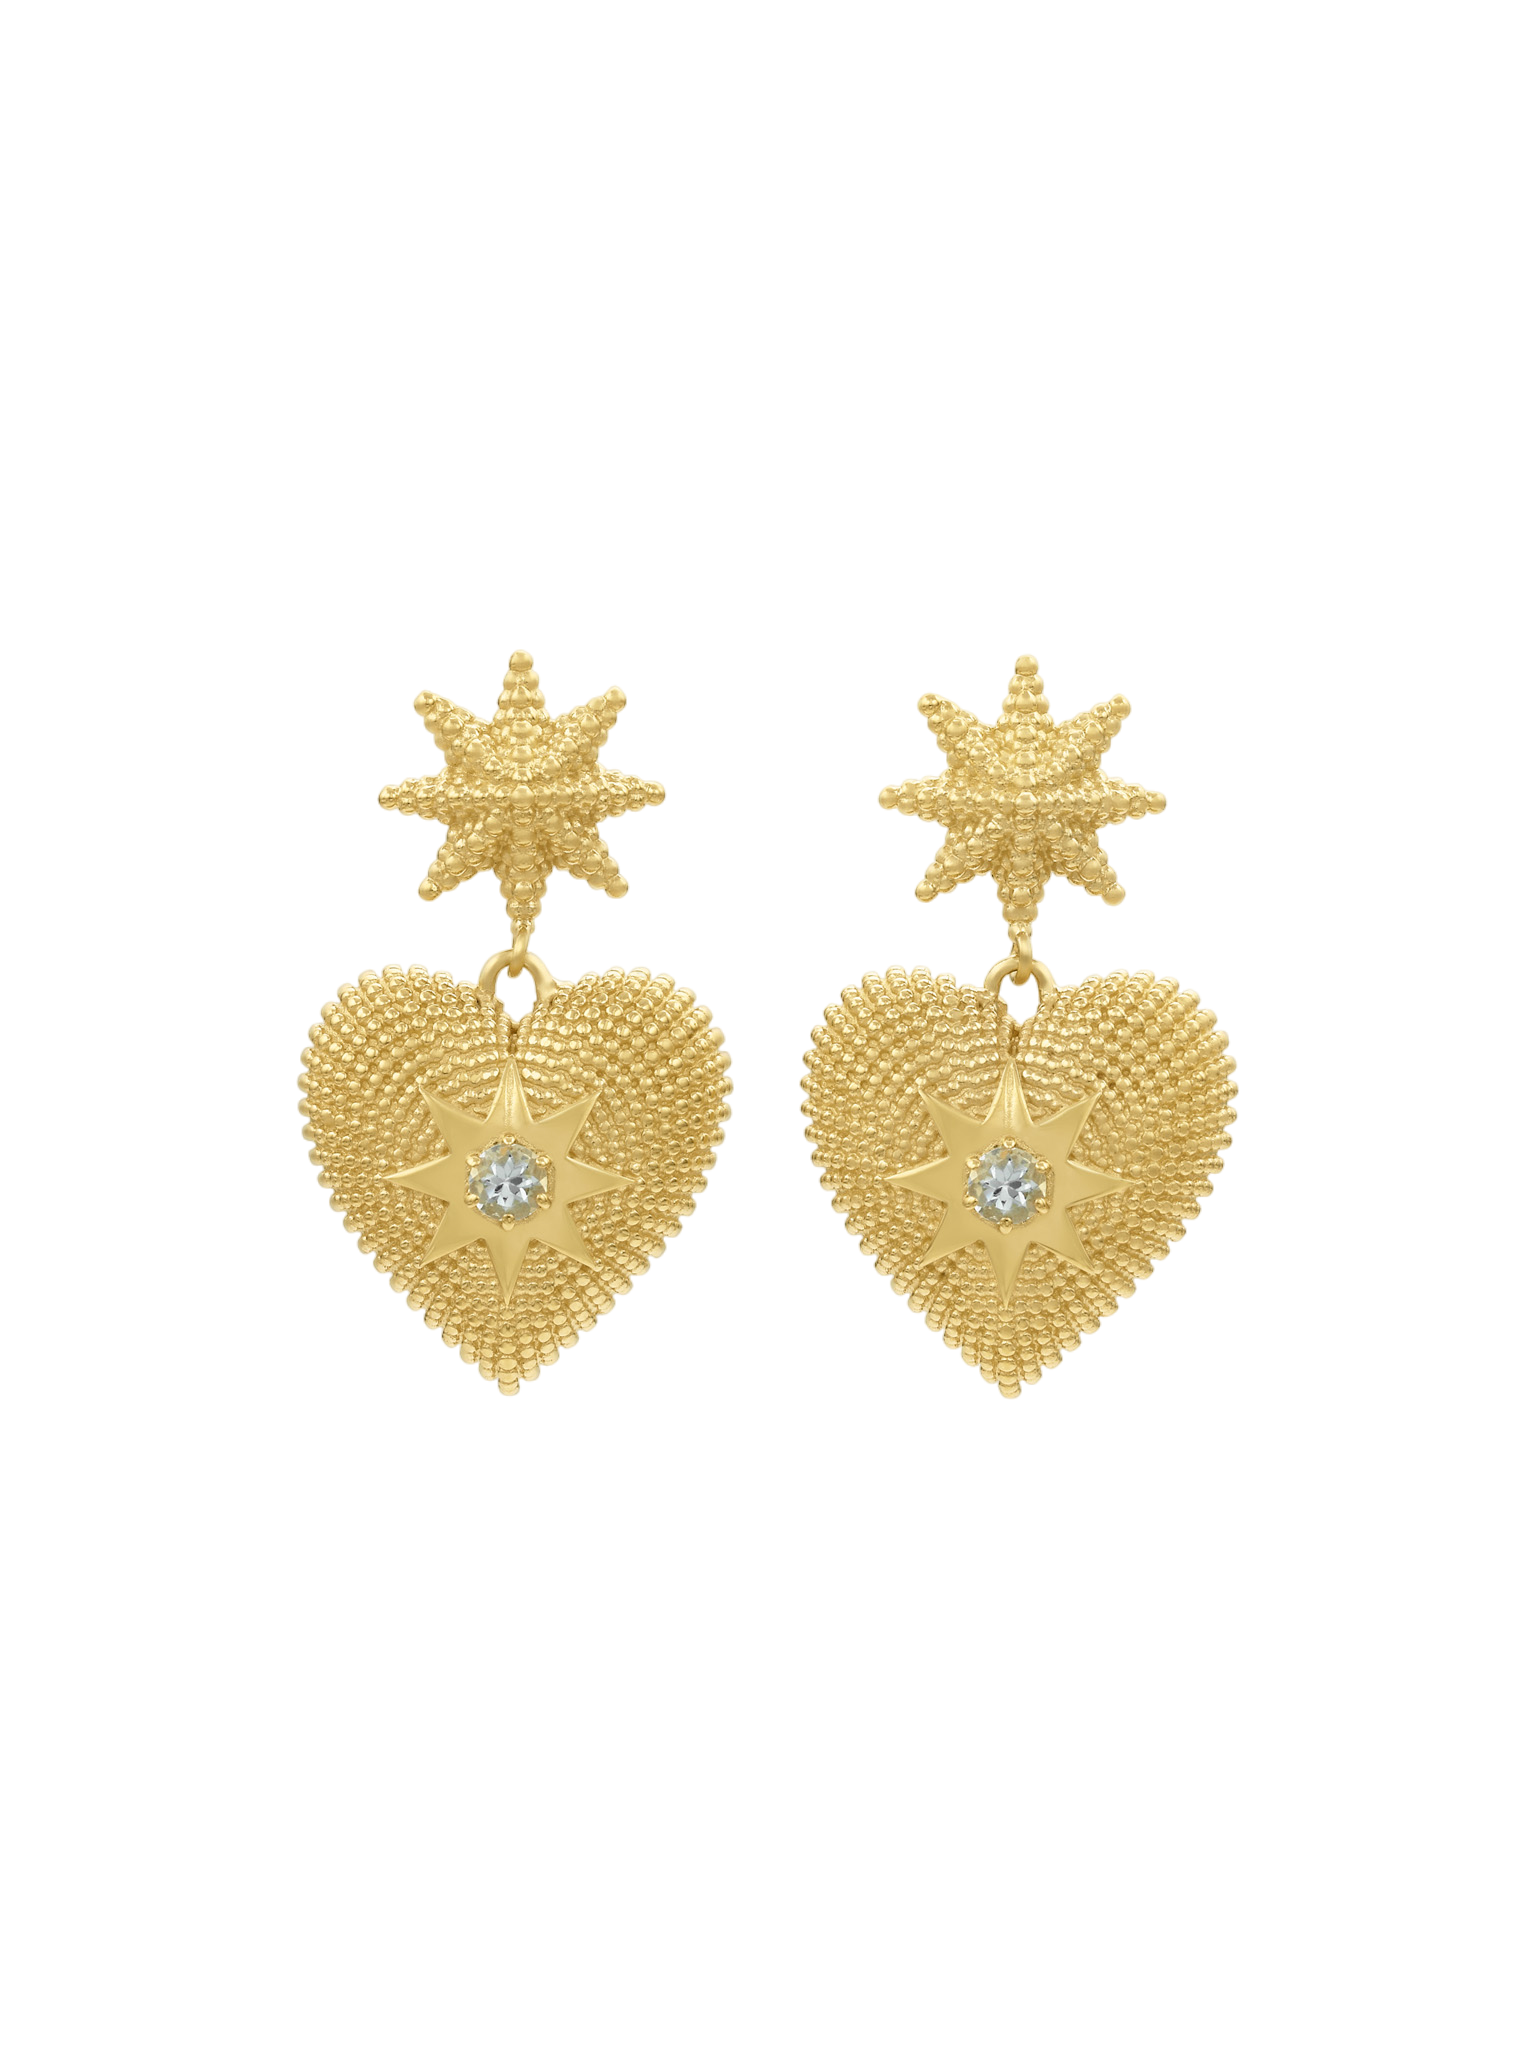 Brave heart aquamarine earrings